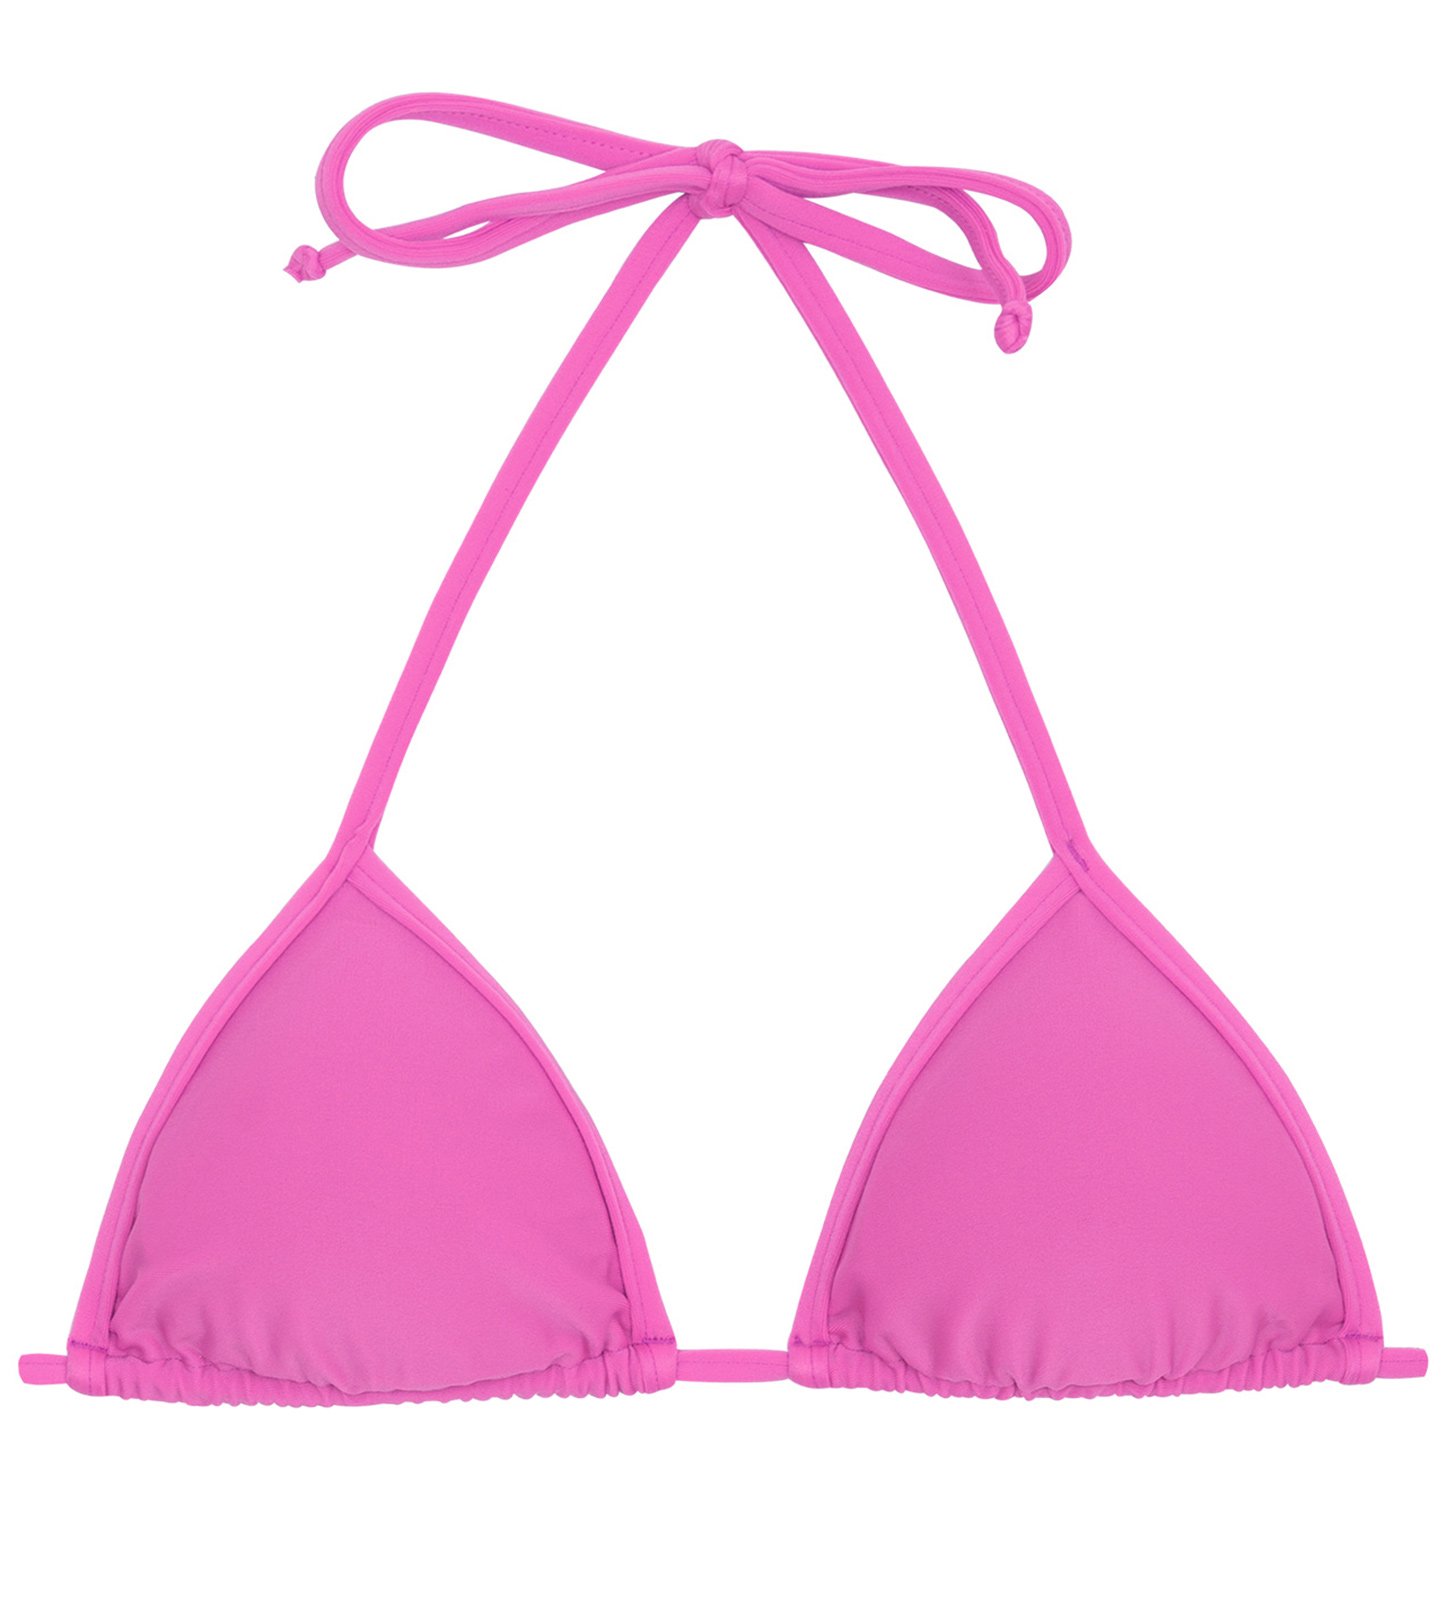 composiet vriendelijk hebben zich vergist Bikini Tops Pink Neck-tied Triangle Bikini Top - Top Bikini Tri